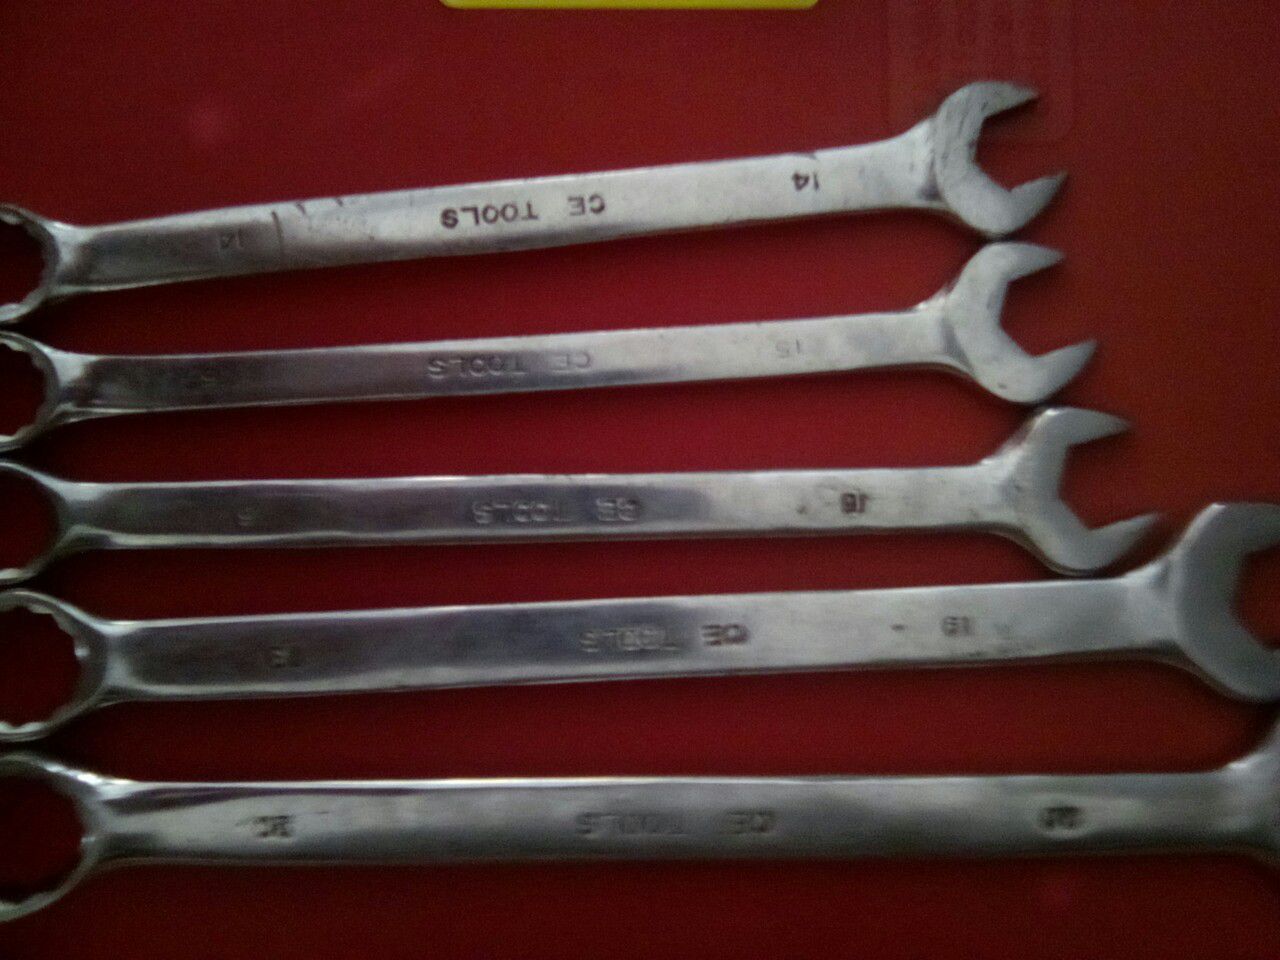 CE Tools